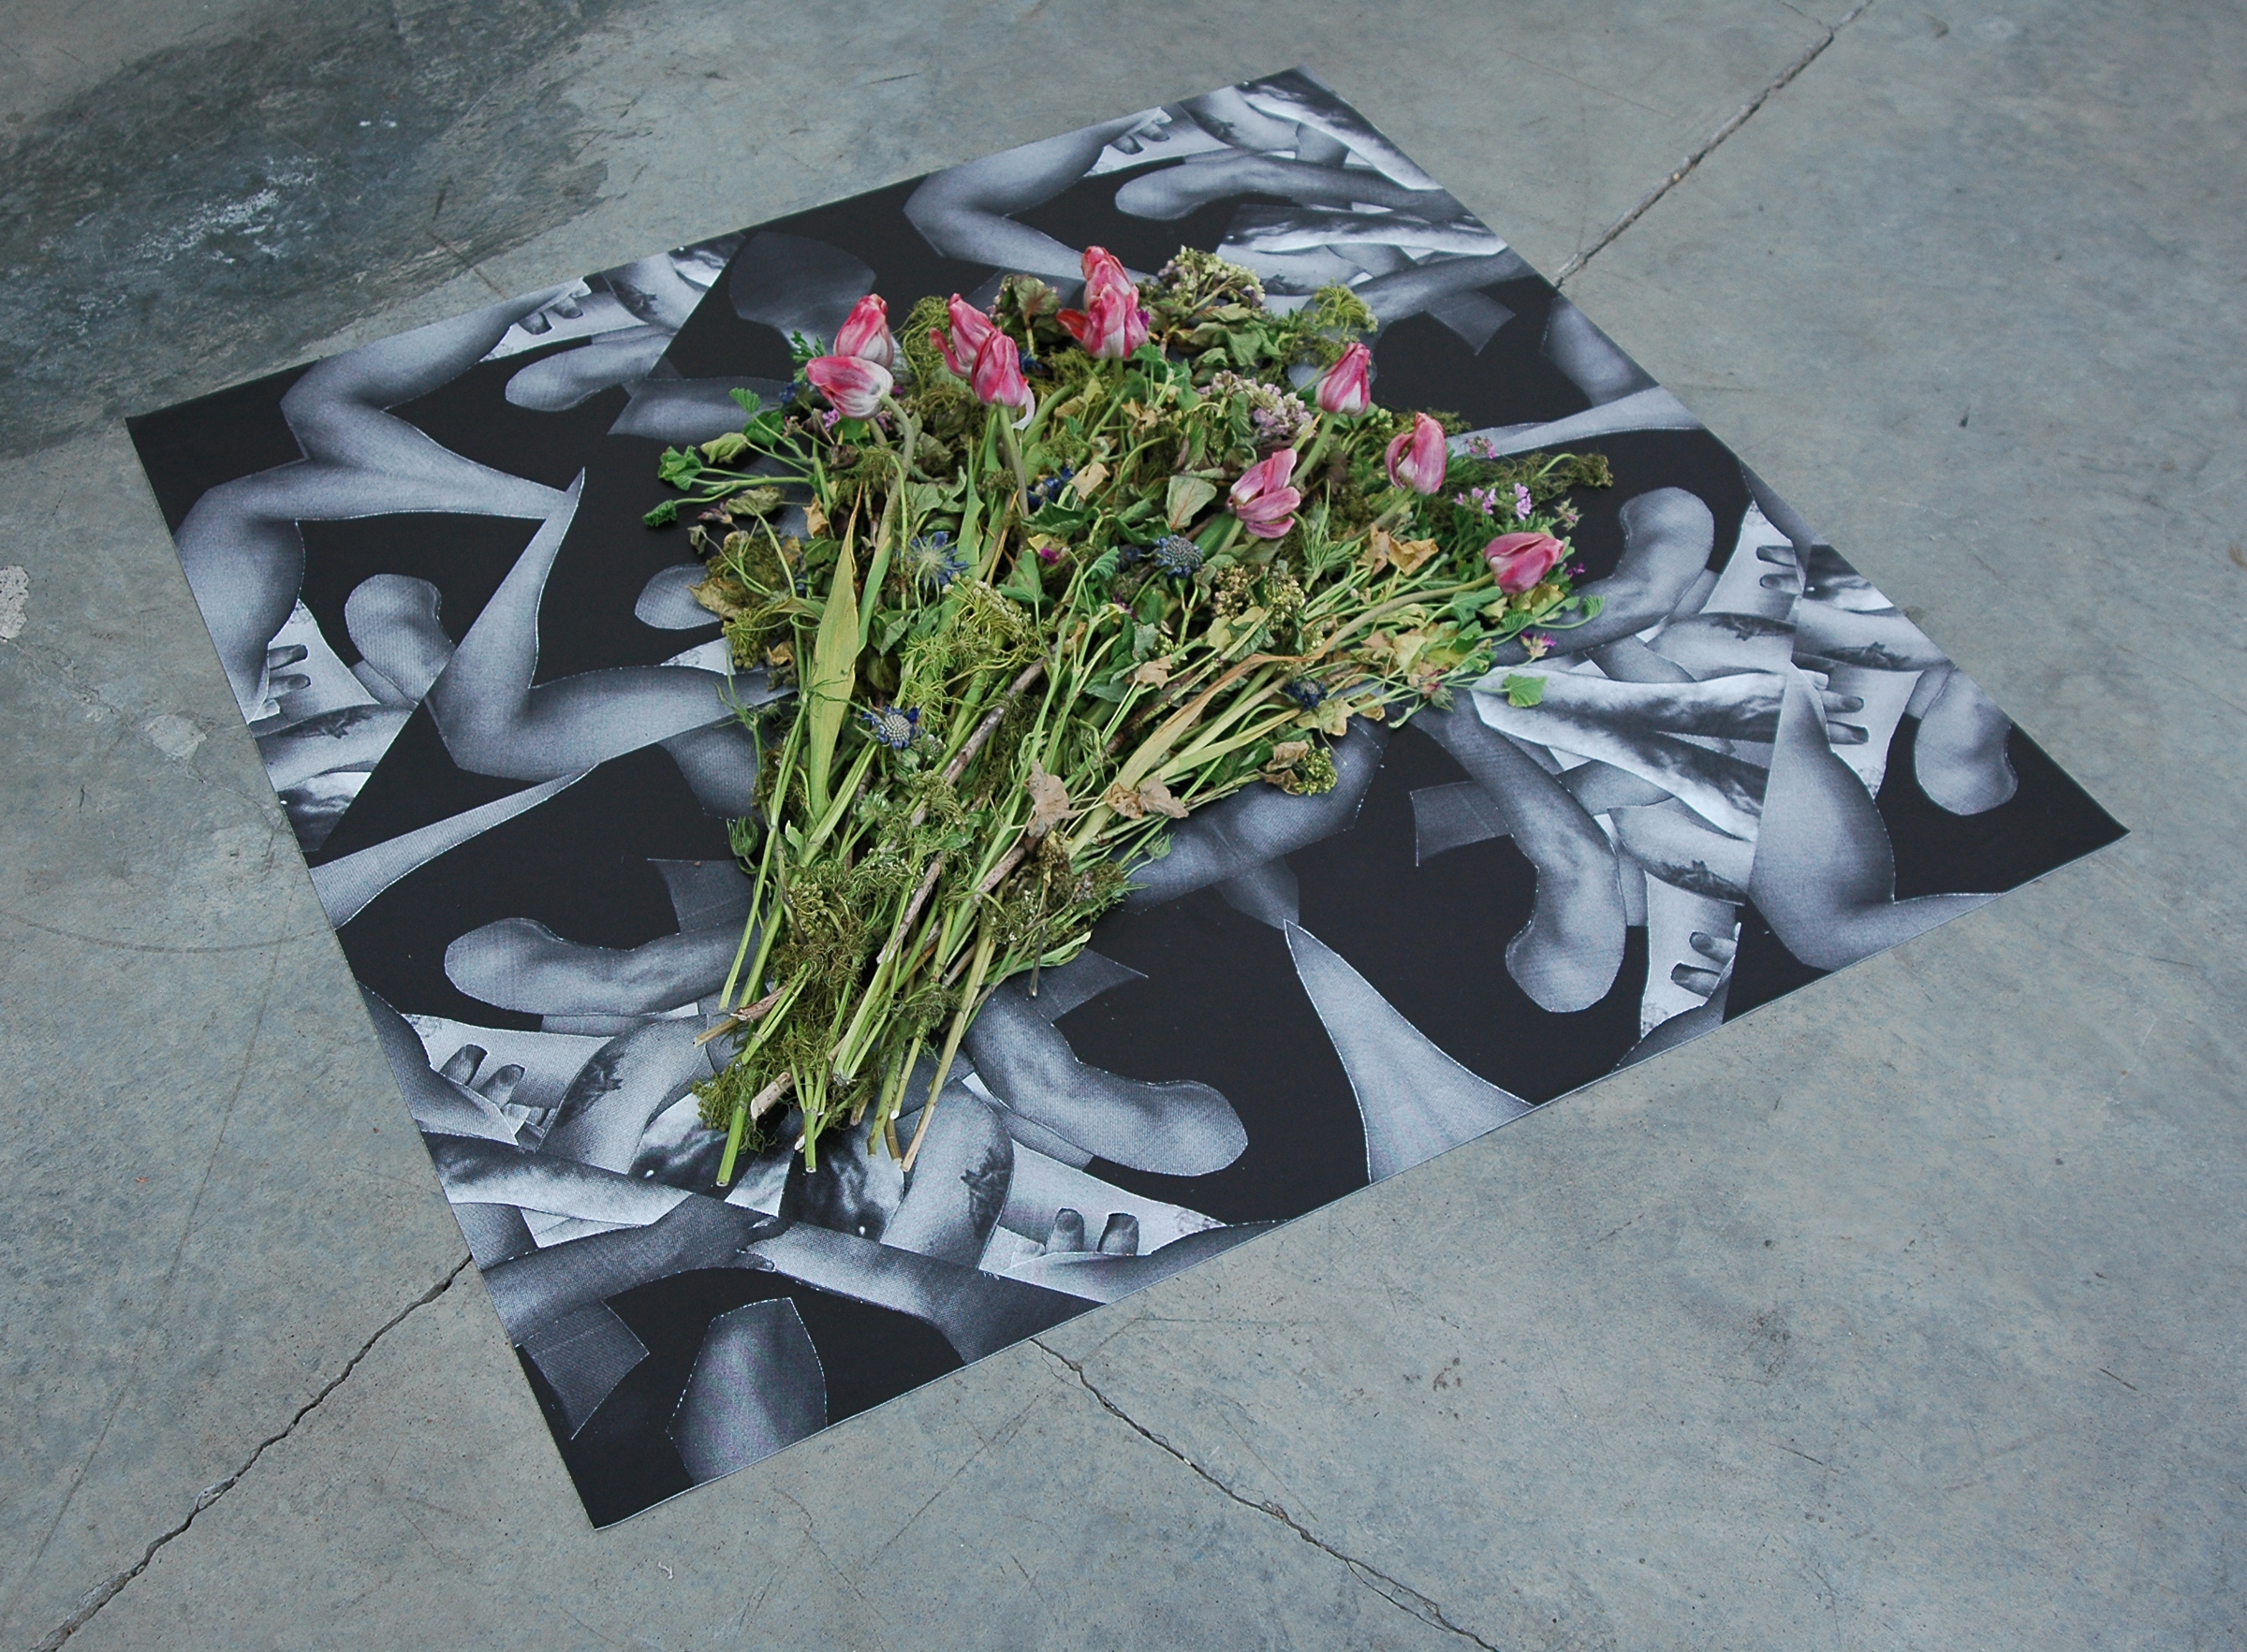   DERIC CARNER   If I Die,&nbsp; vinyl print and flowers, 48" x 48", 2014 